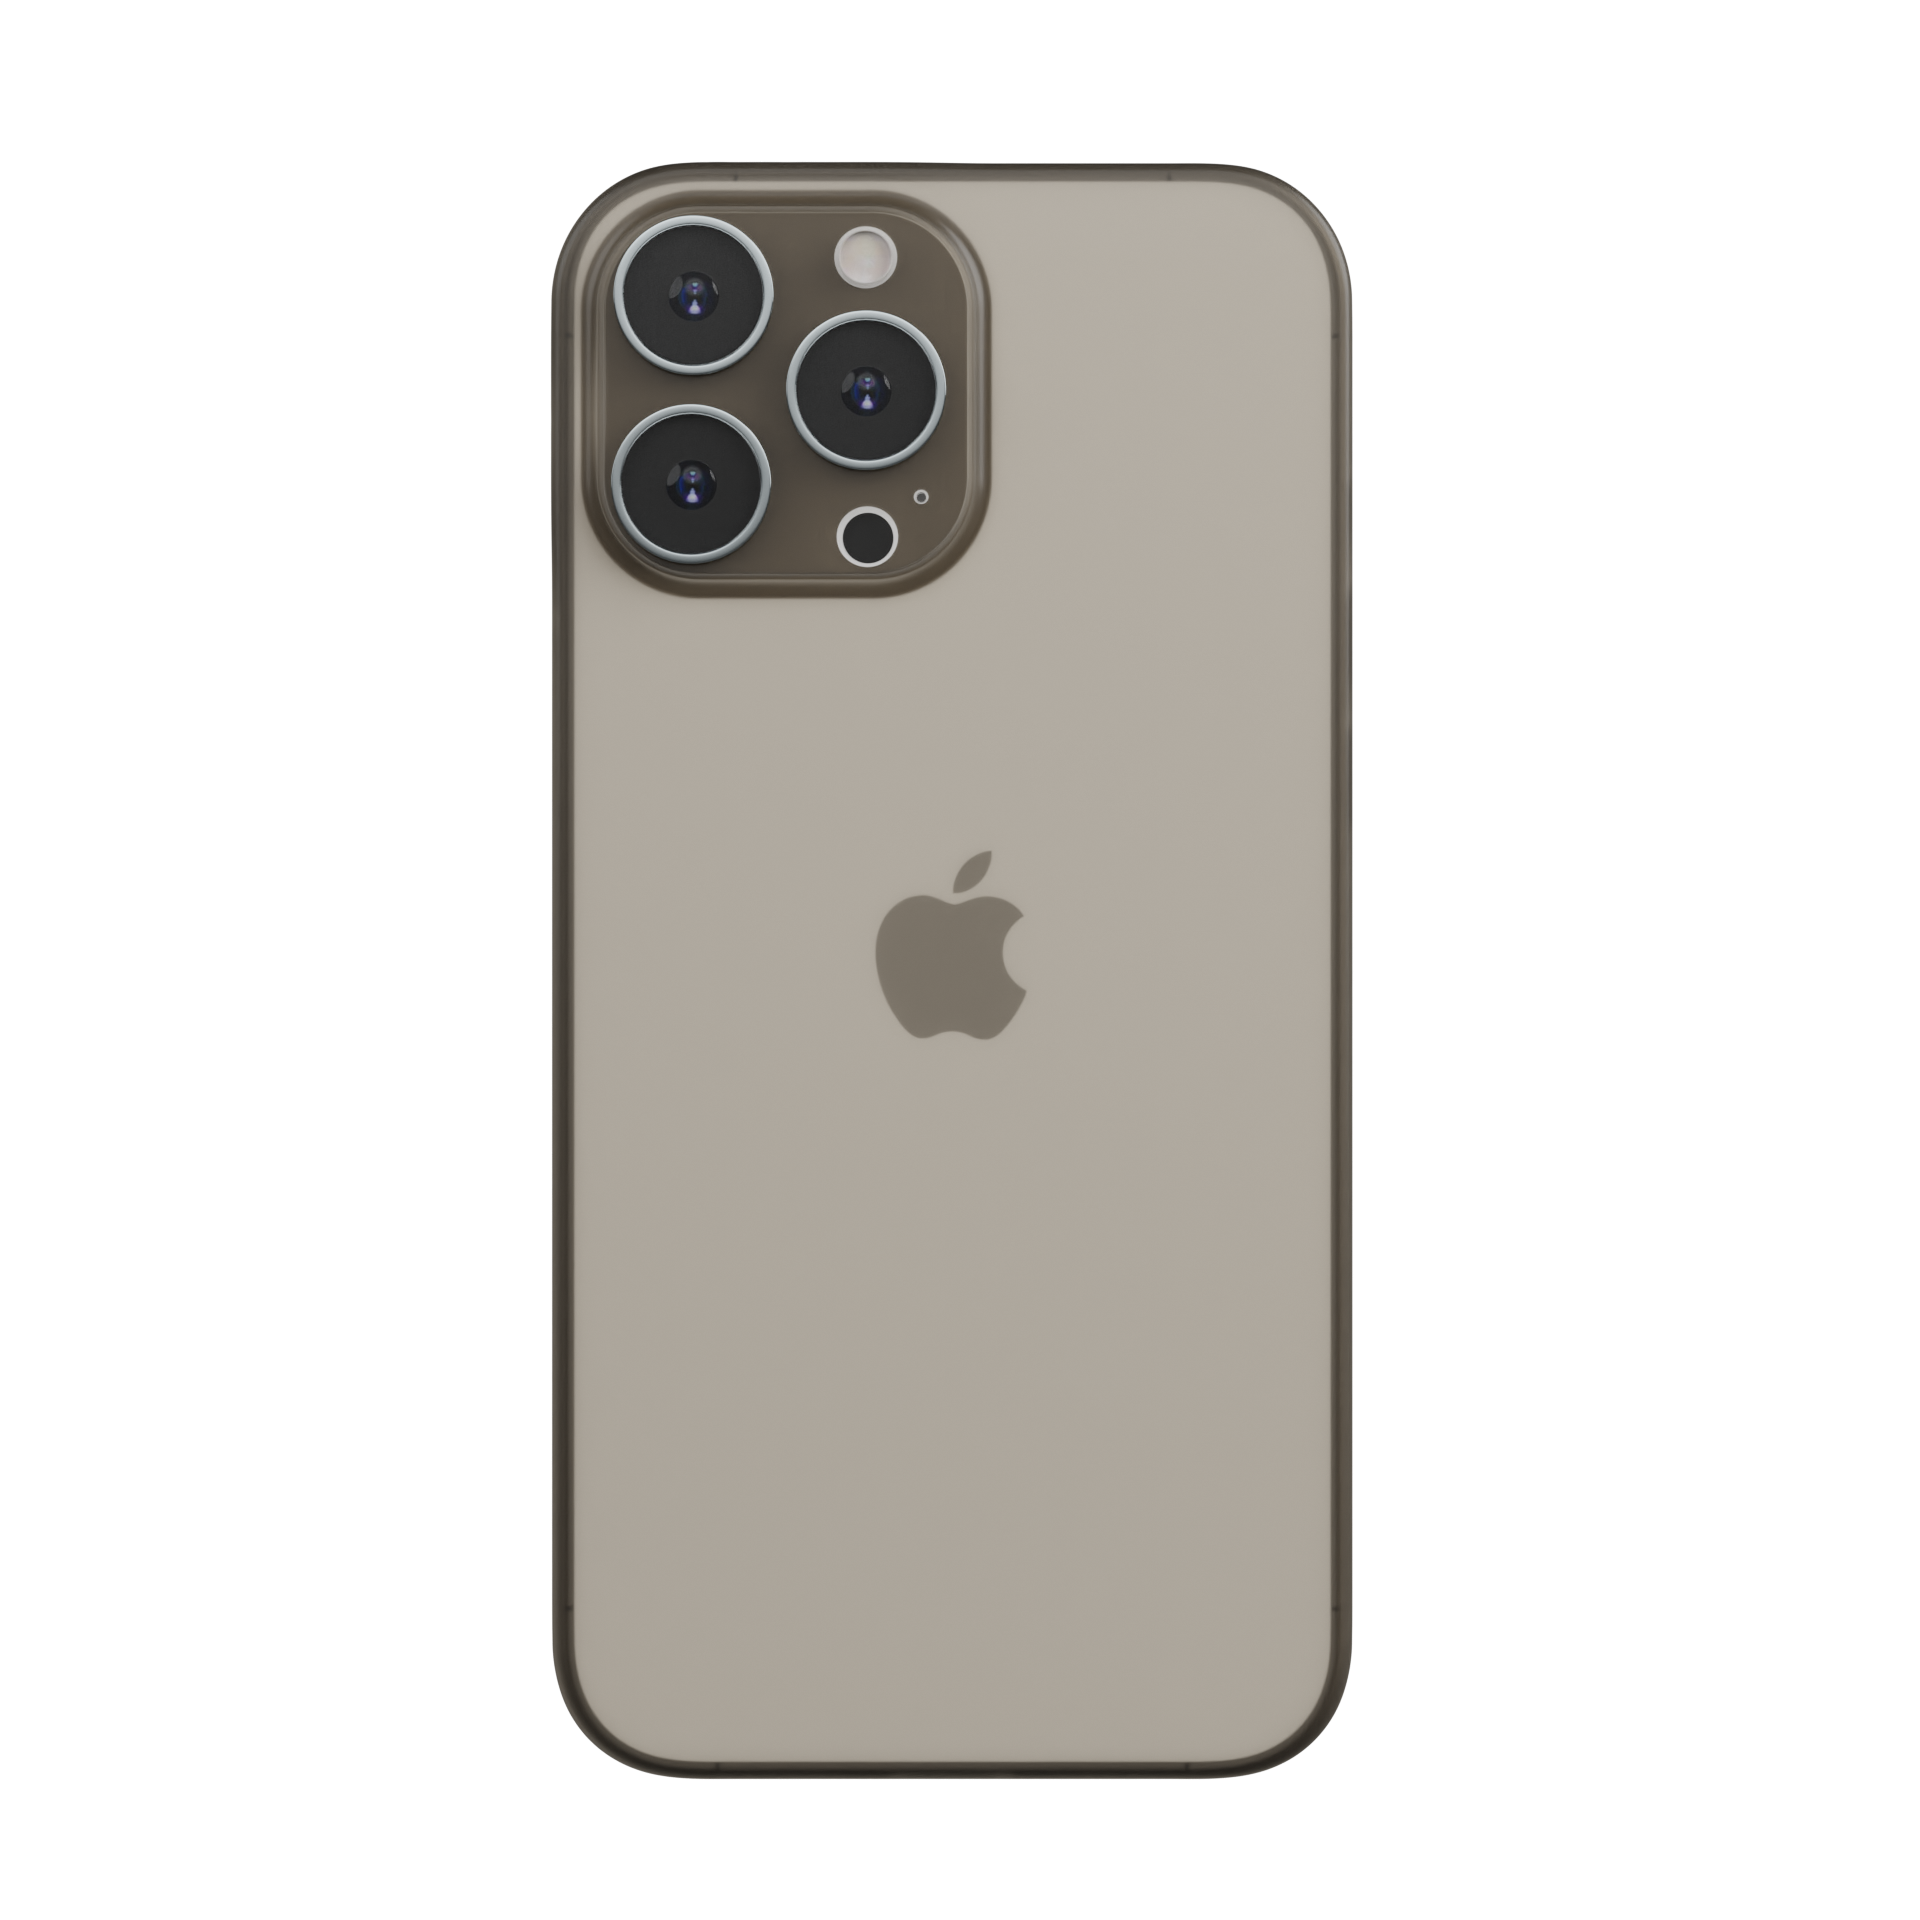 Thin iPhone 13 Mini Case - PHNX